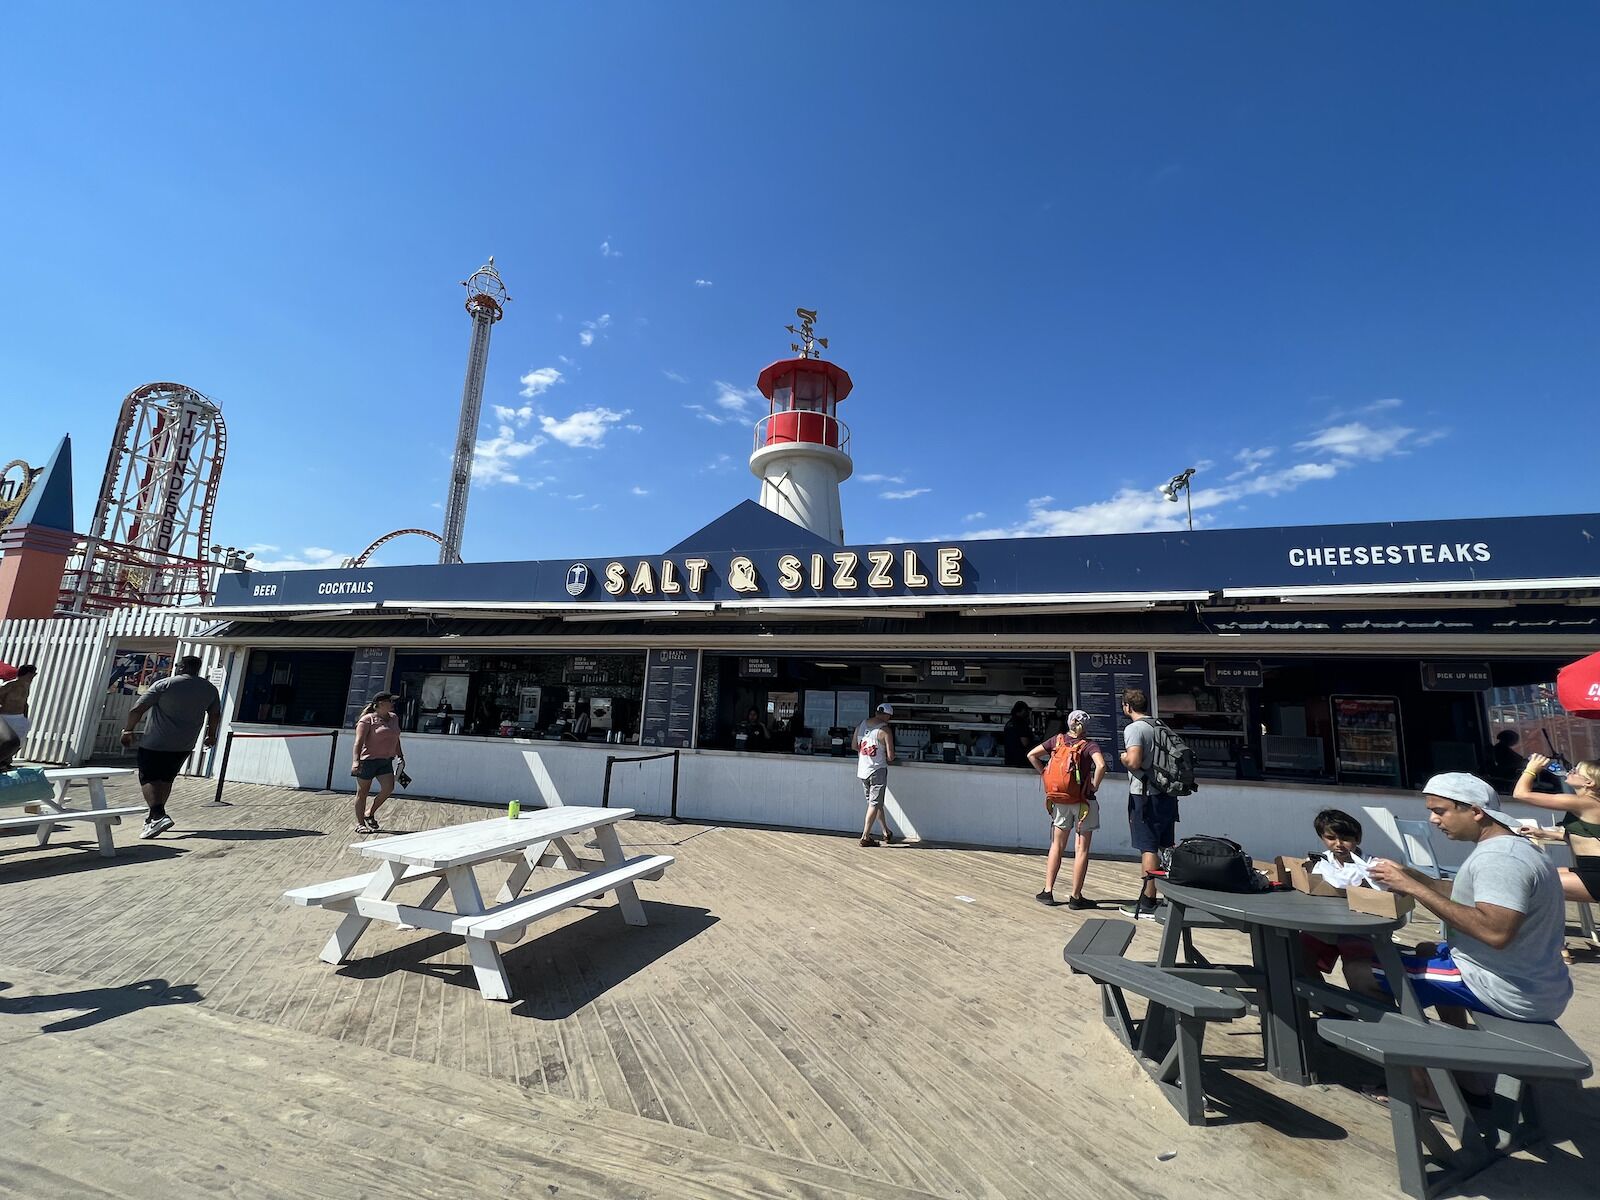 Salt and Sizzle exterior - Coney Island boardwalk